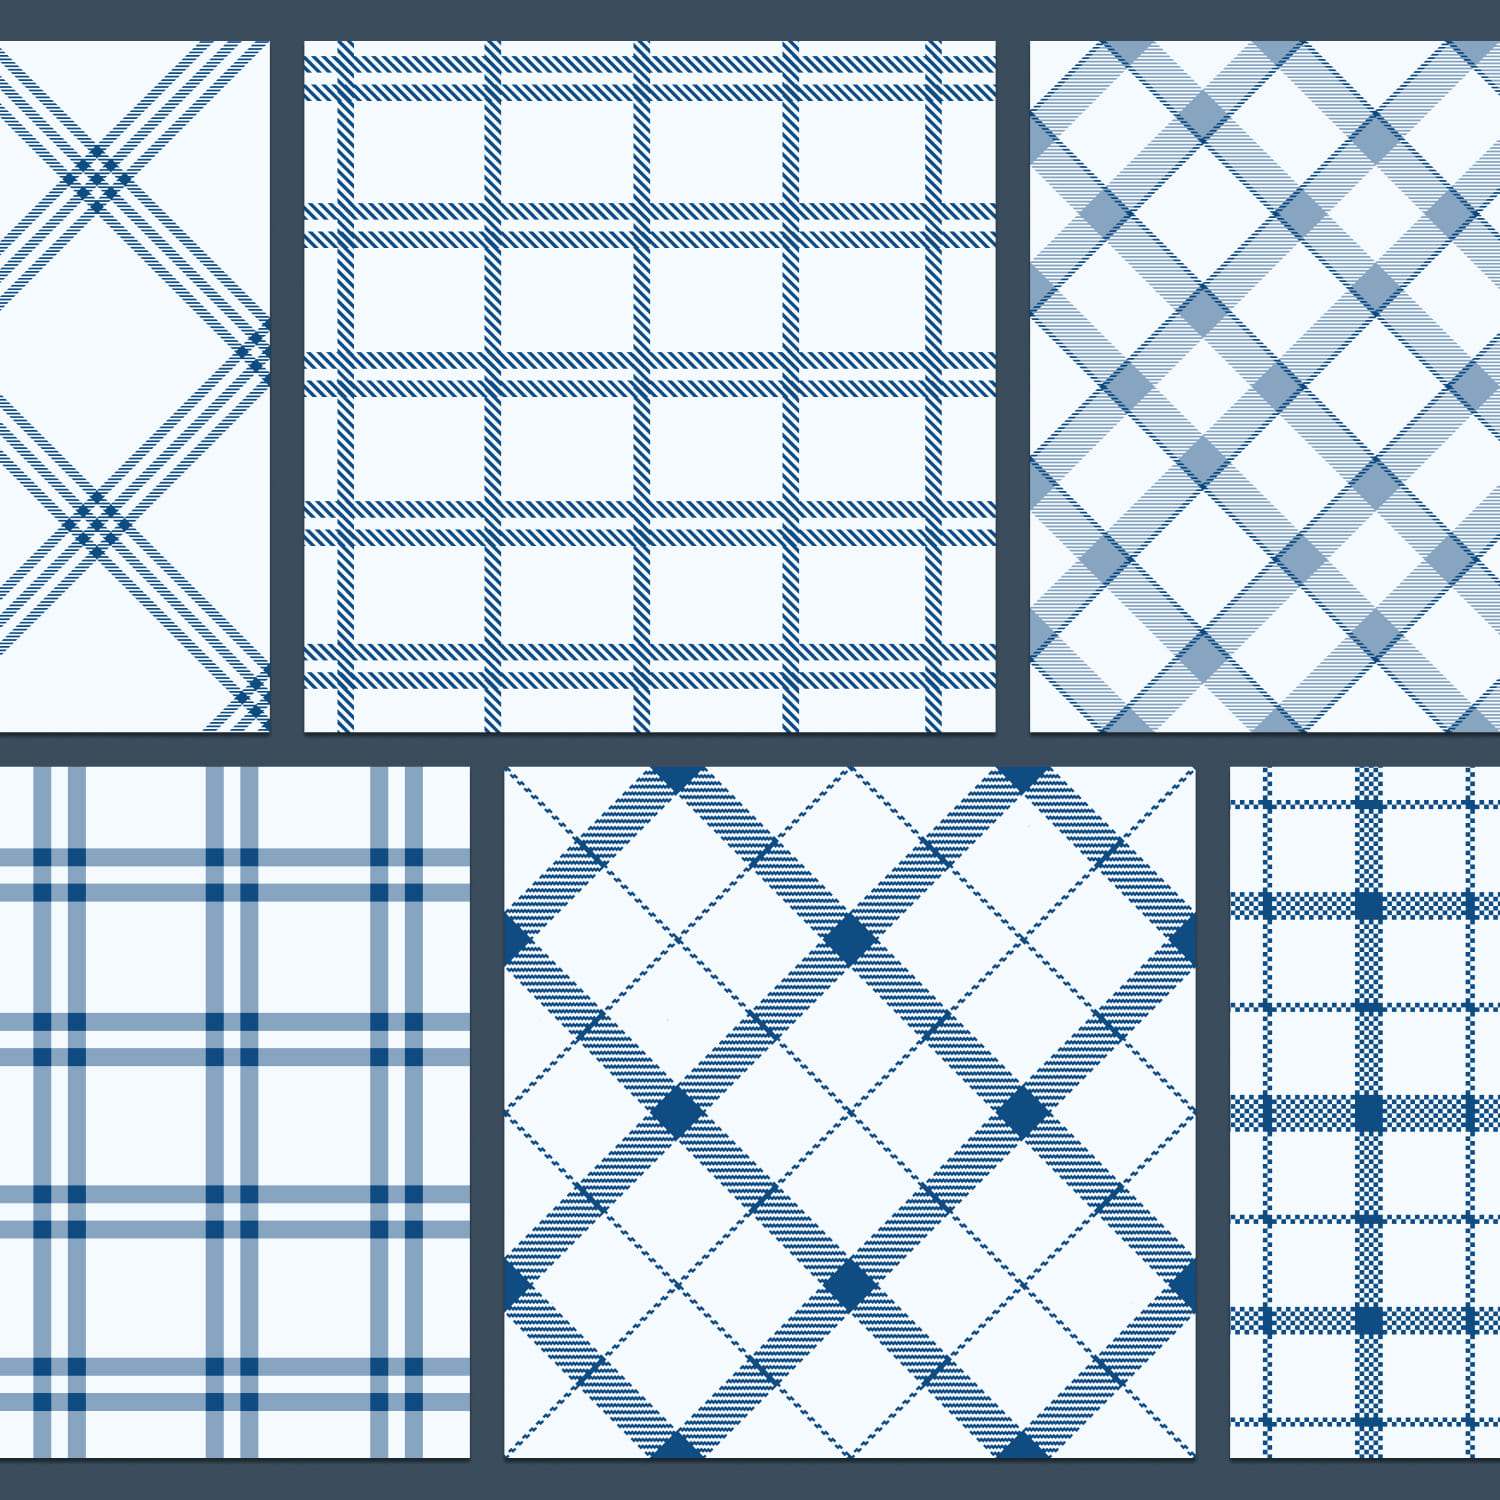 blue gingham patterns v2 cover.